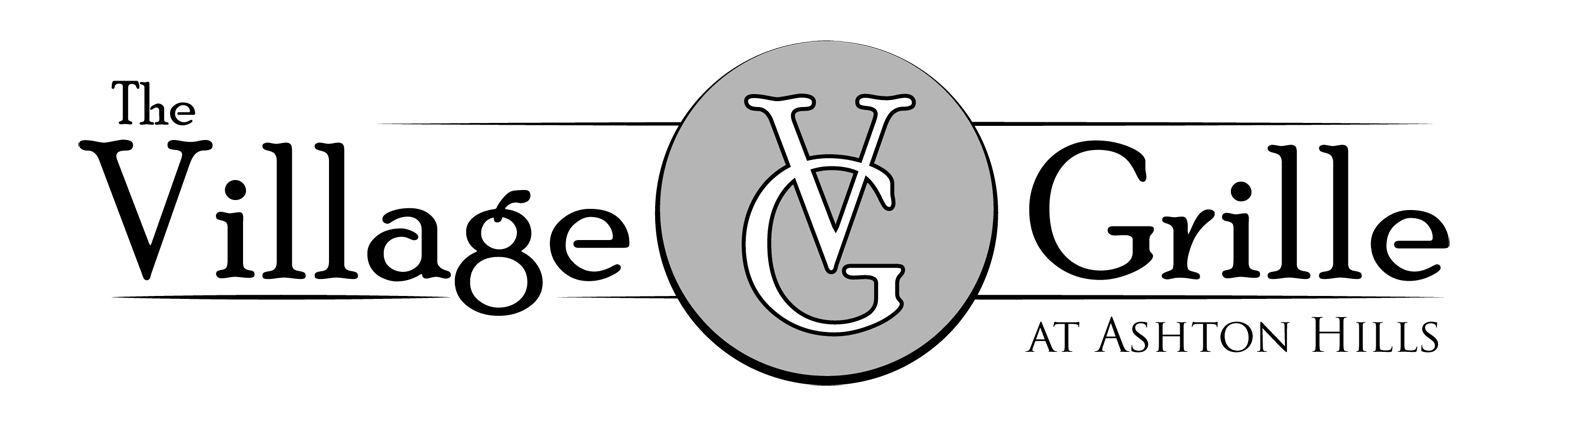 Village grille-logo